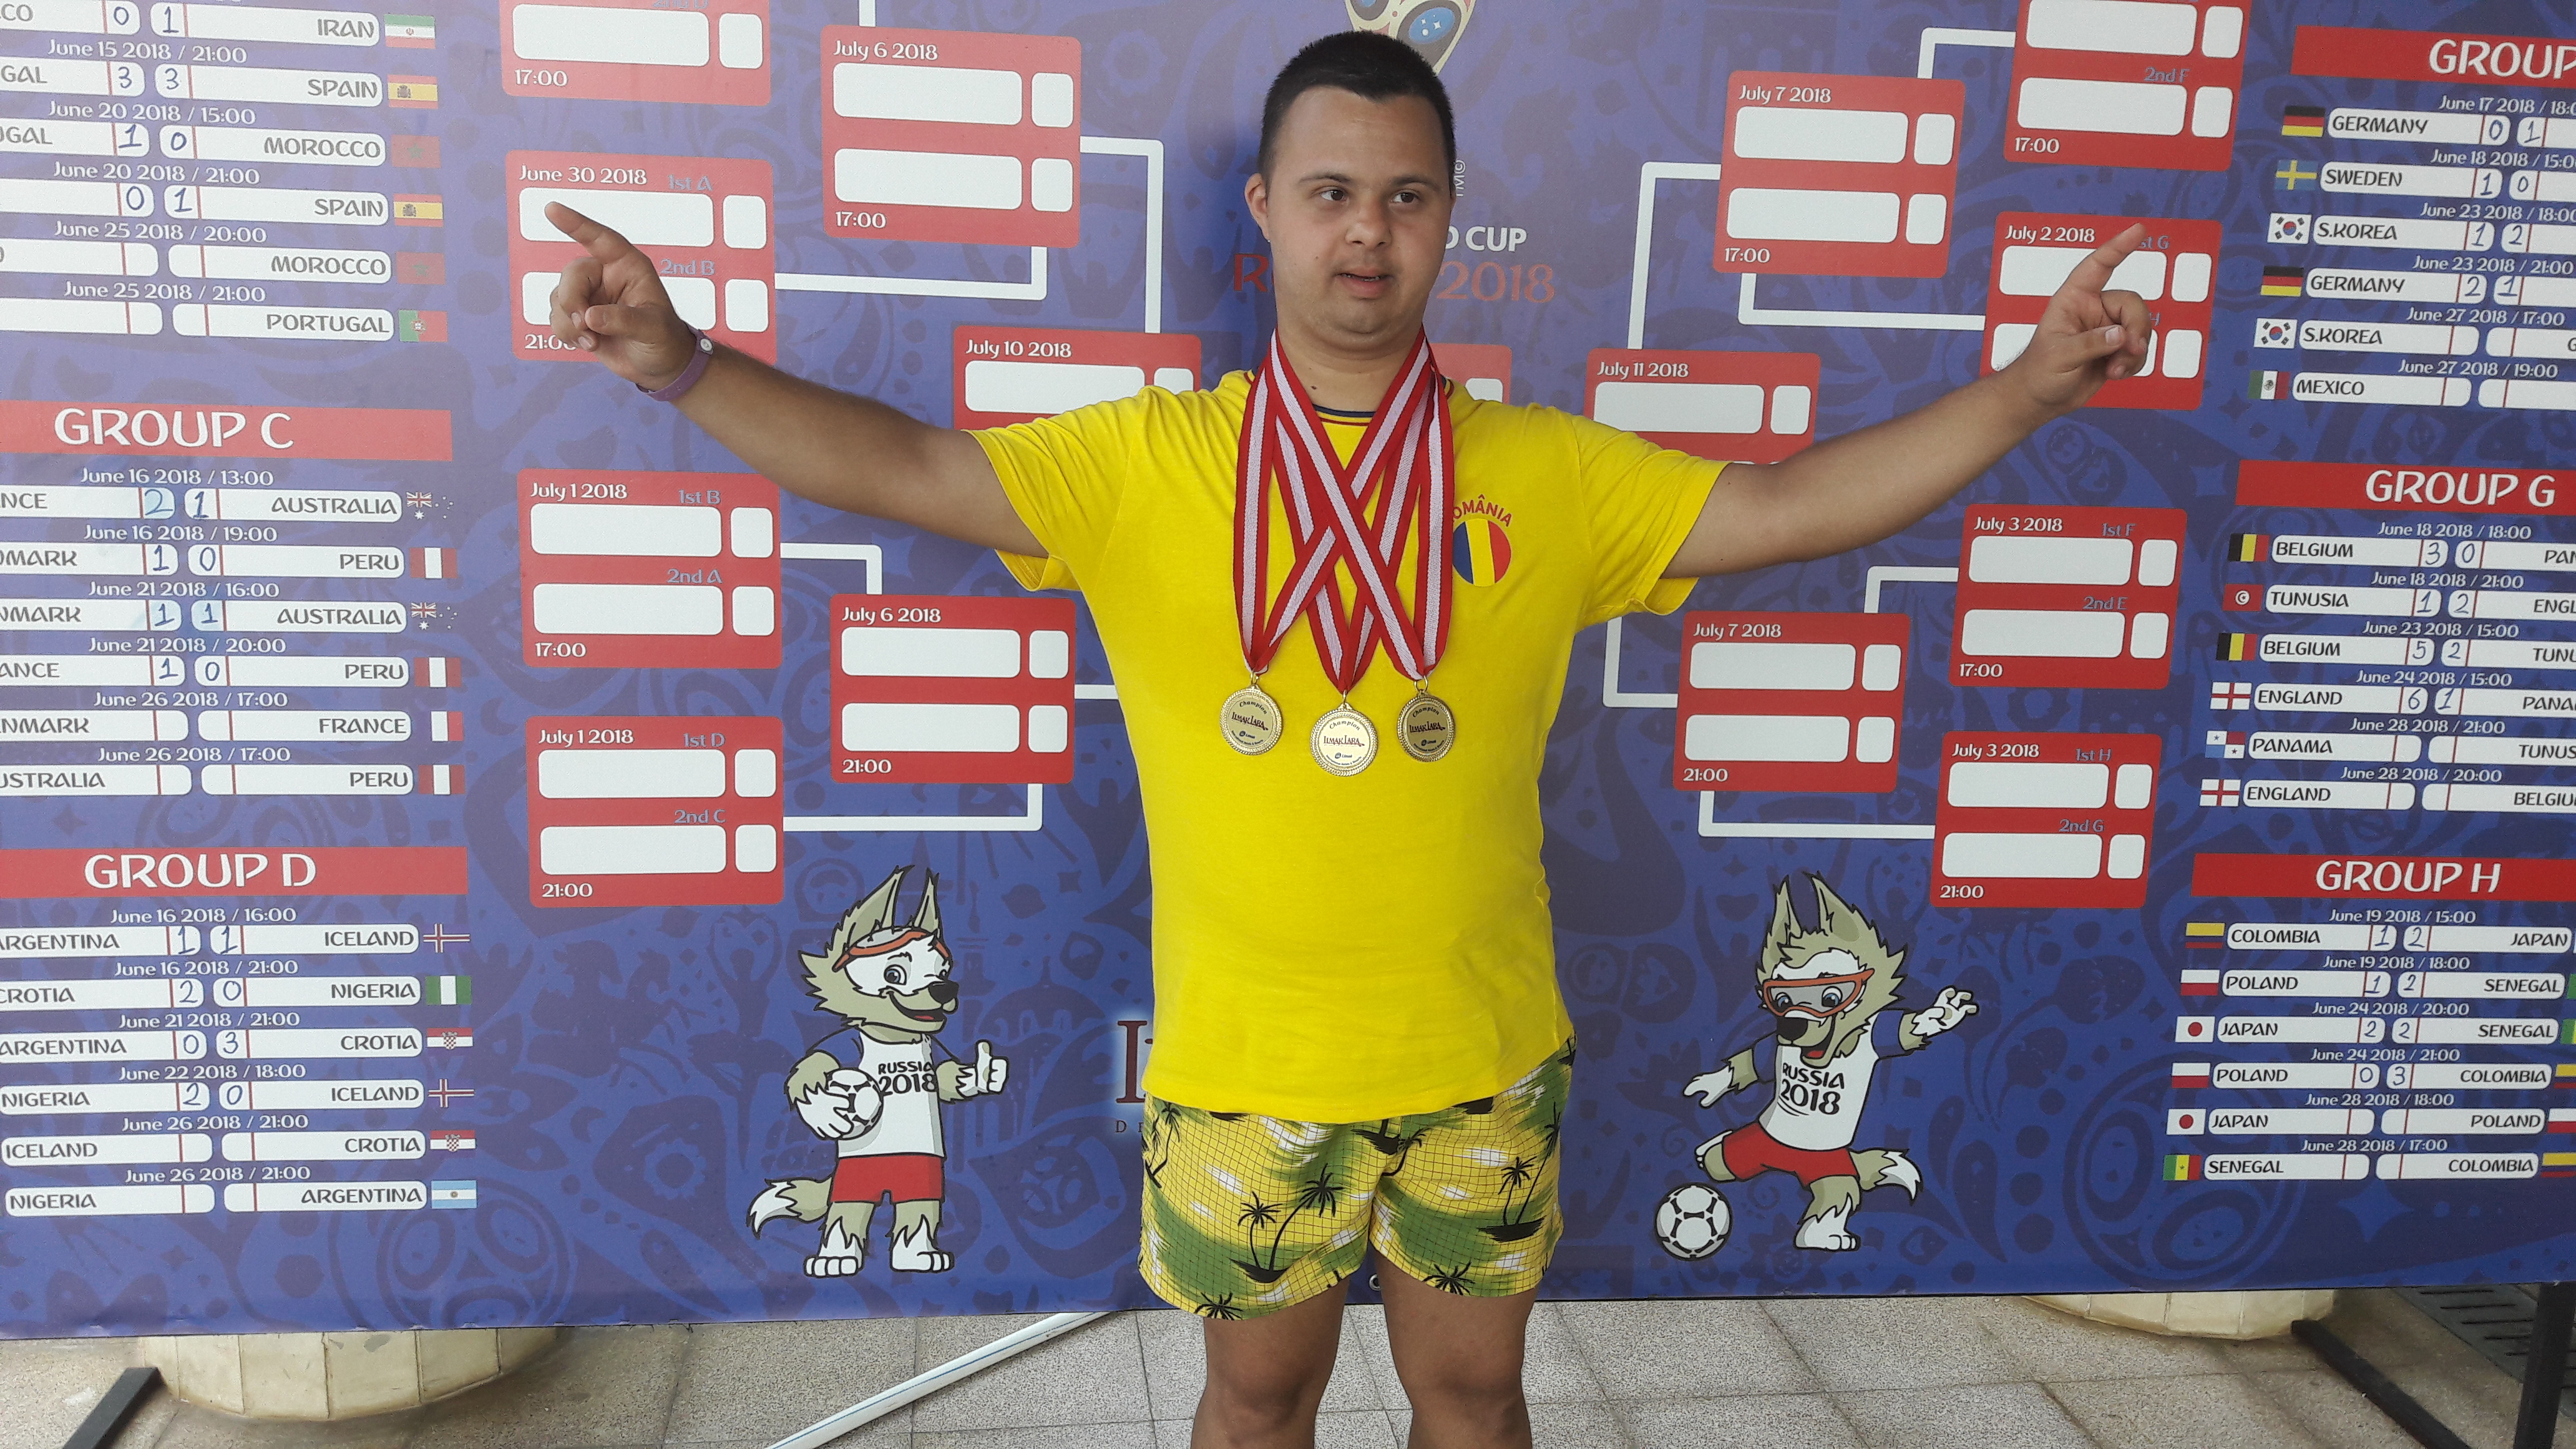 Victorie in competitii sportive amicale ,in Antalya -Turcia  Teodor Tanase a participat la competitii sportive amicale de:darts,volei,tenis de masa ,polo si gimnastica aerobica . A castigat 5 medalii in Antalya-Turcia .